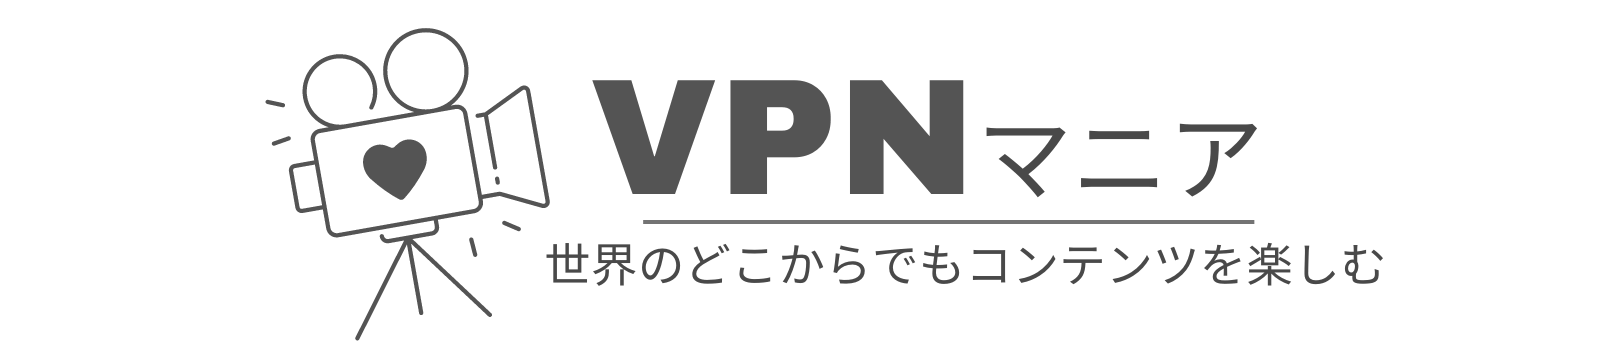 VPNマニア